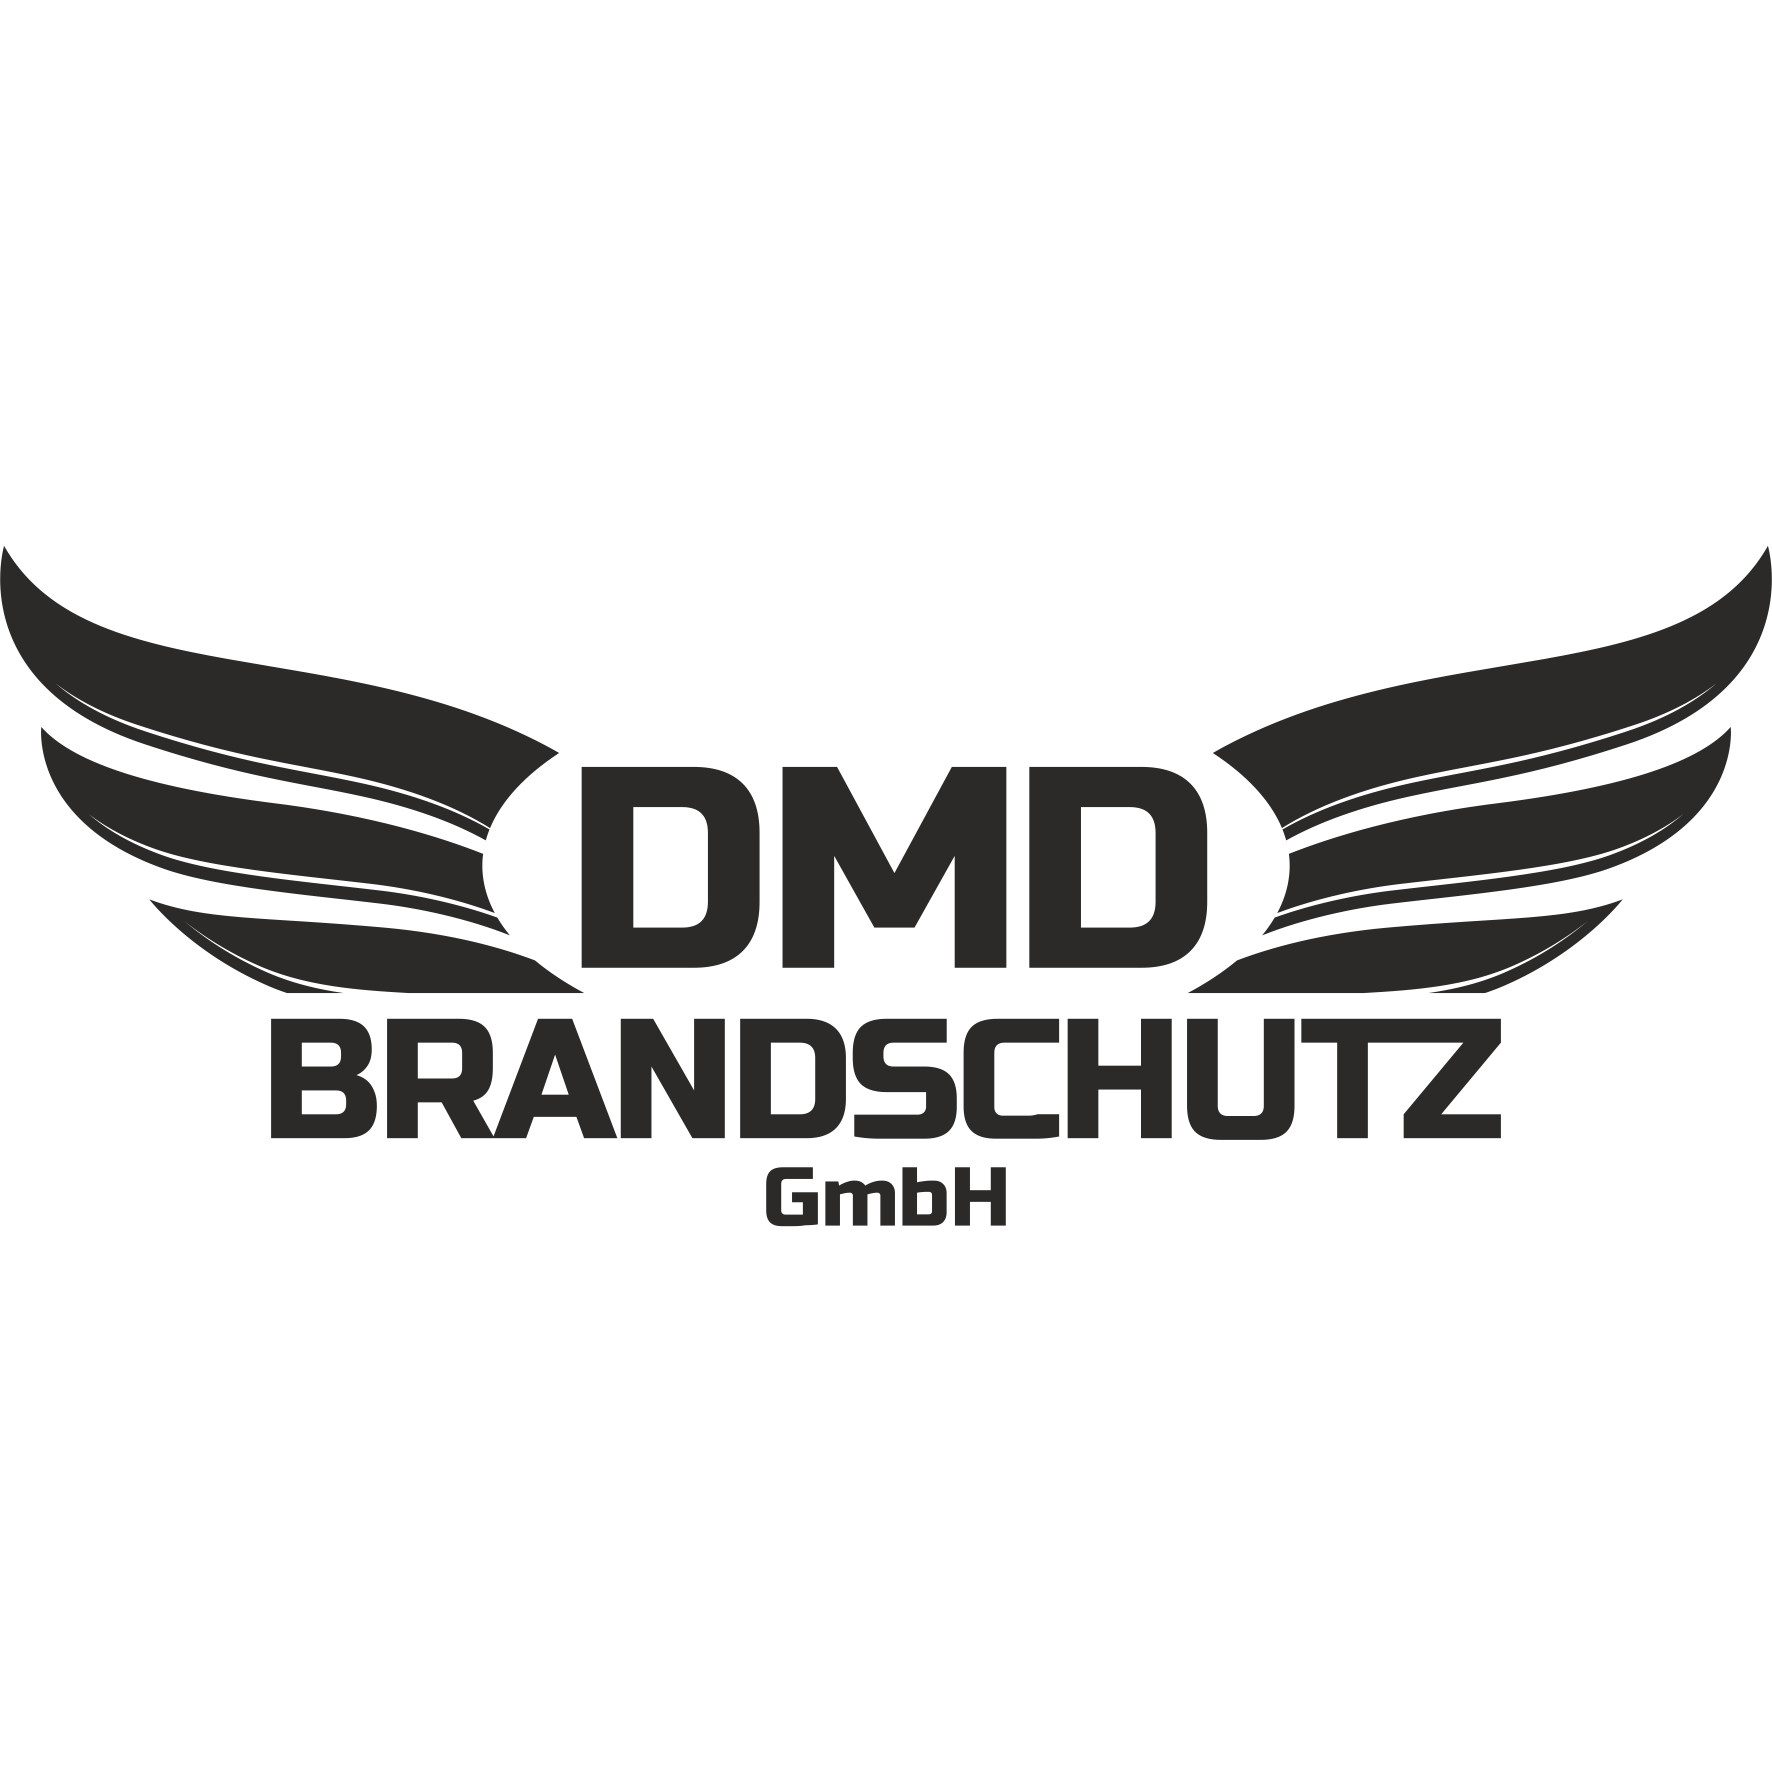 DMD-Brandschutz GmbH - Fire Protection Service - Duisburg - 0203 31775288 Germany | ShowMeLocal.com